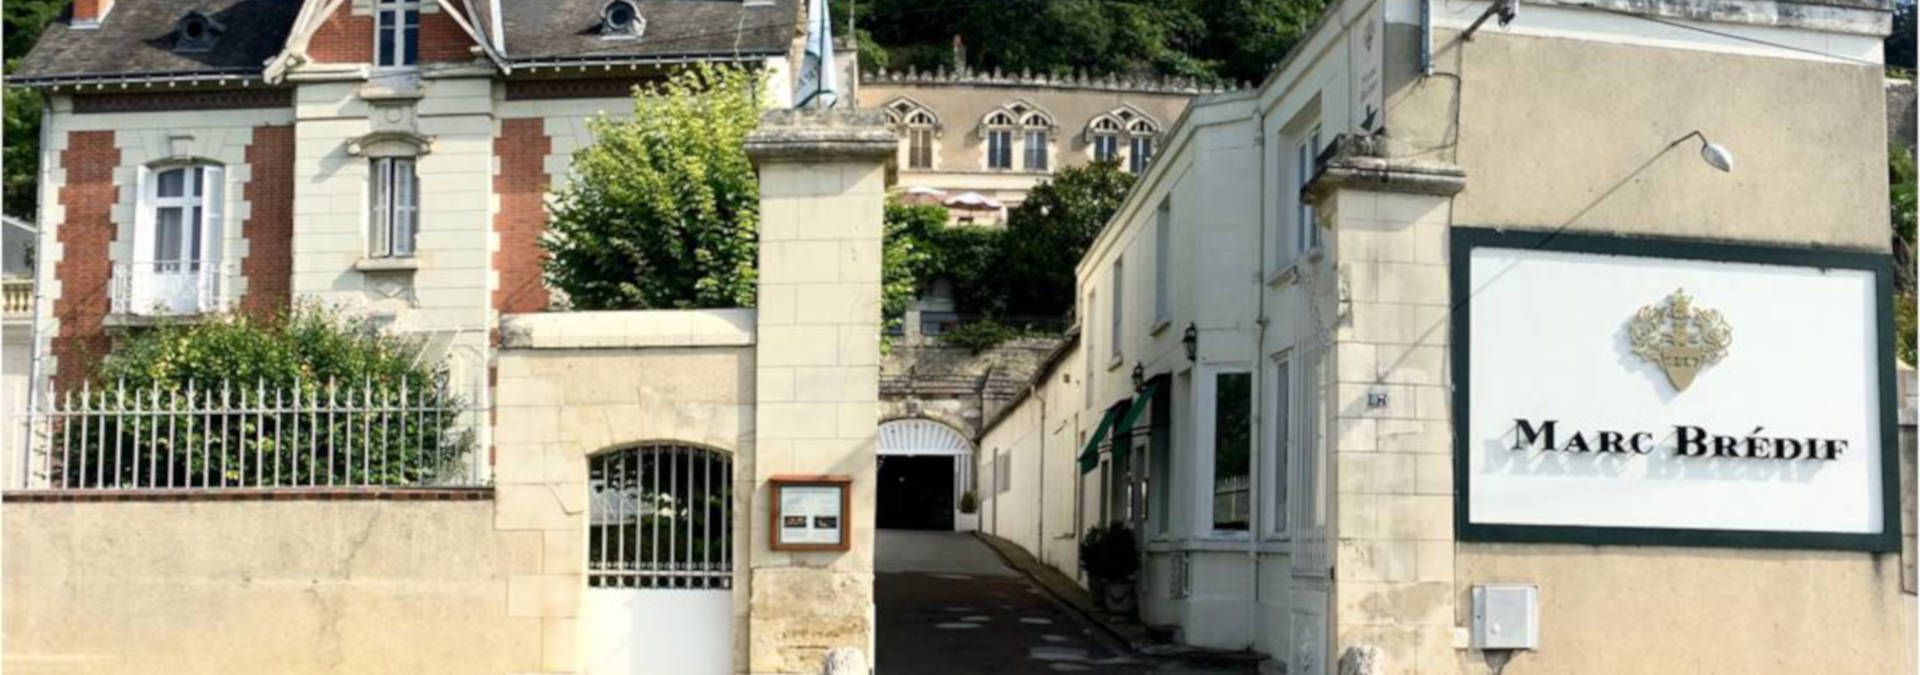 Maison Bredif - Rue des Vignerons